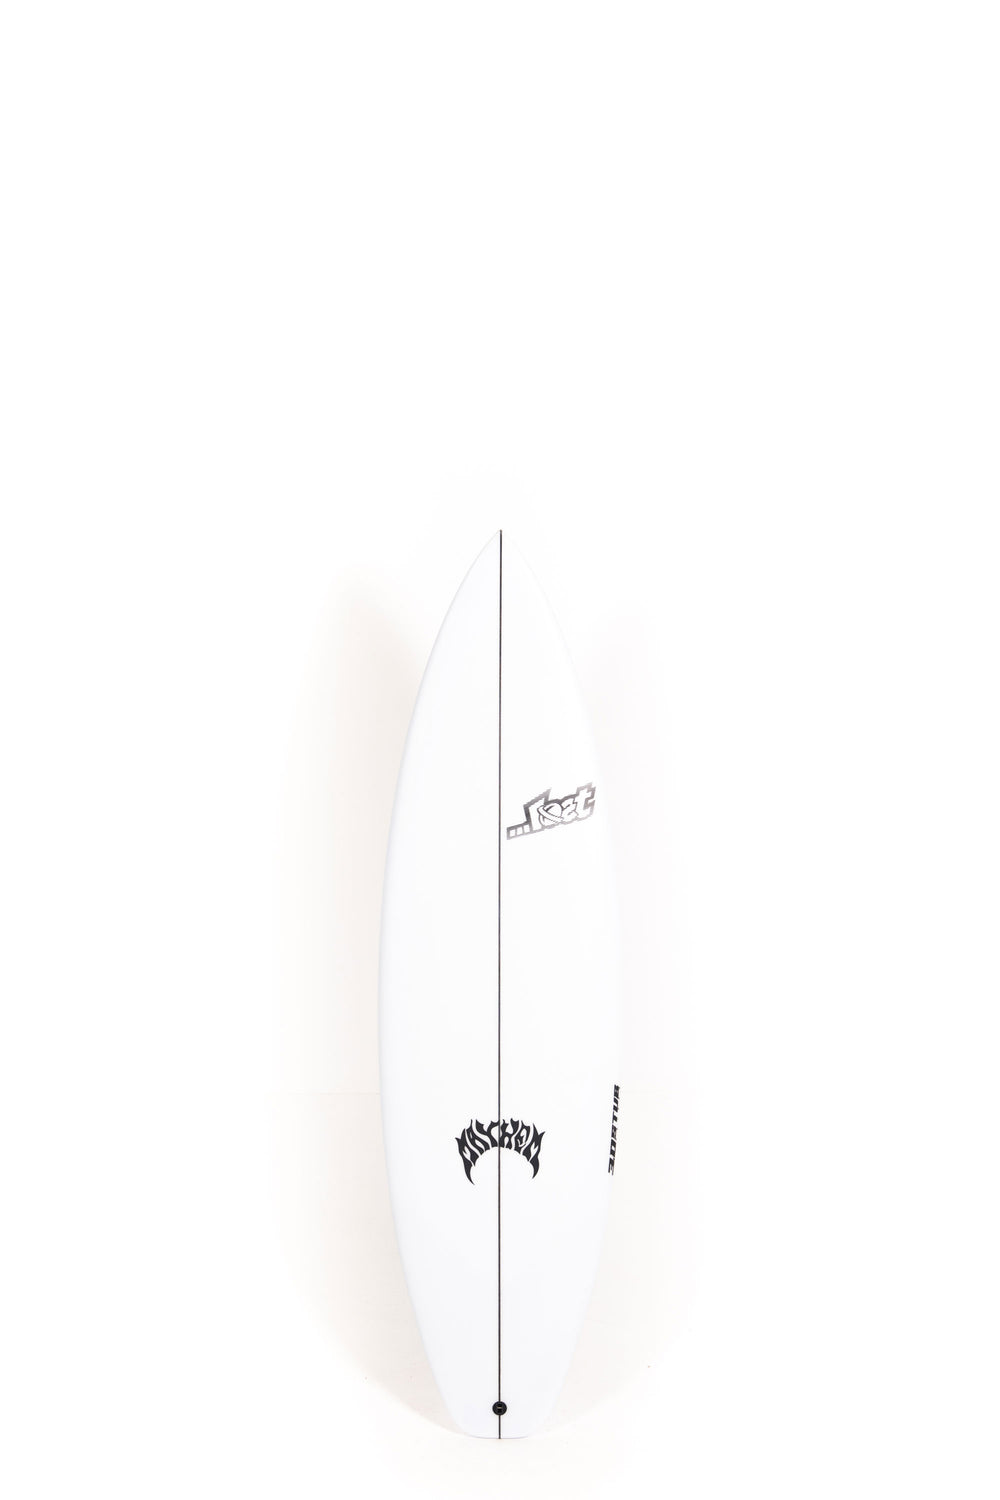 Pukas Surf Shop - Lost Surfboard - 3.0_STUB DRIVER by Matt Biolos - 5’8” x 18.75